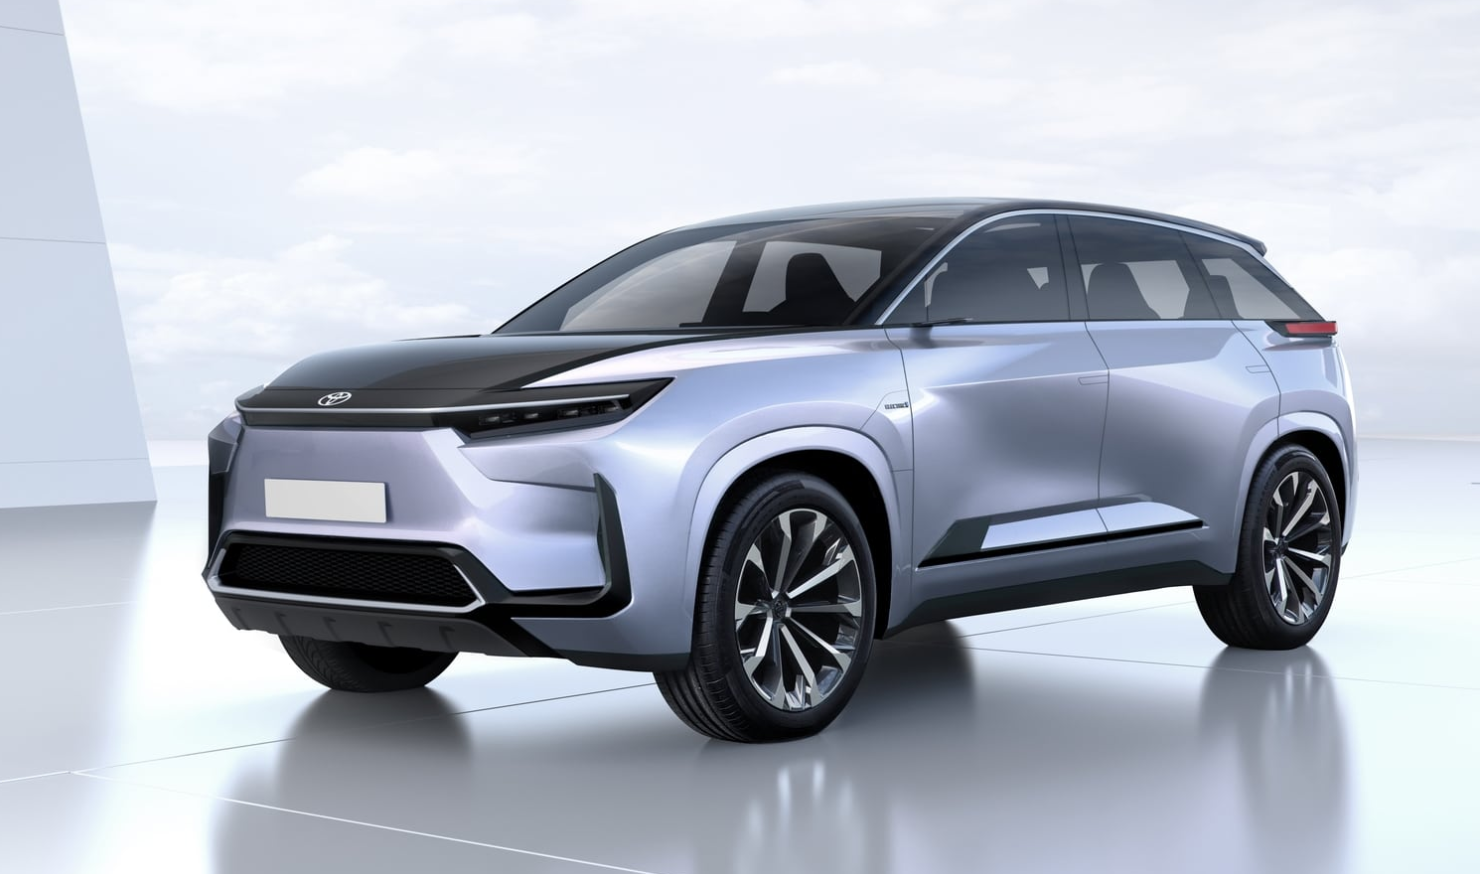 2025 Toyota Ev Revolutionizing The Electric Vehicle Market